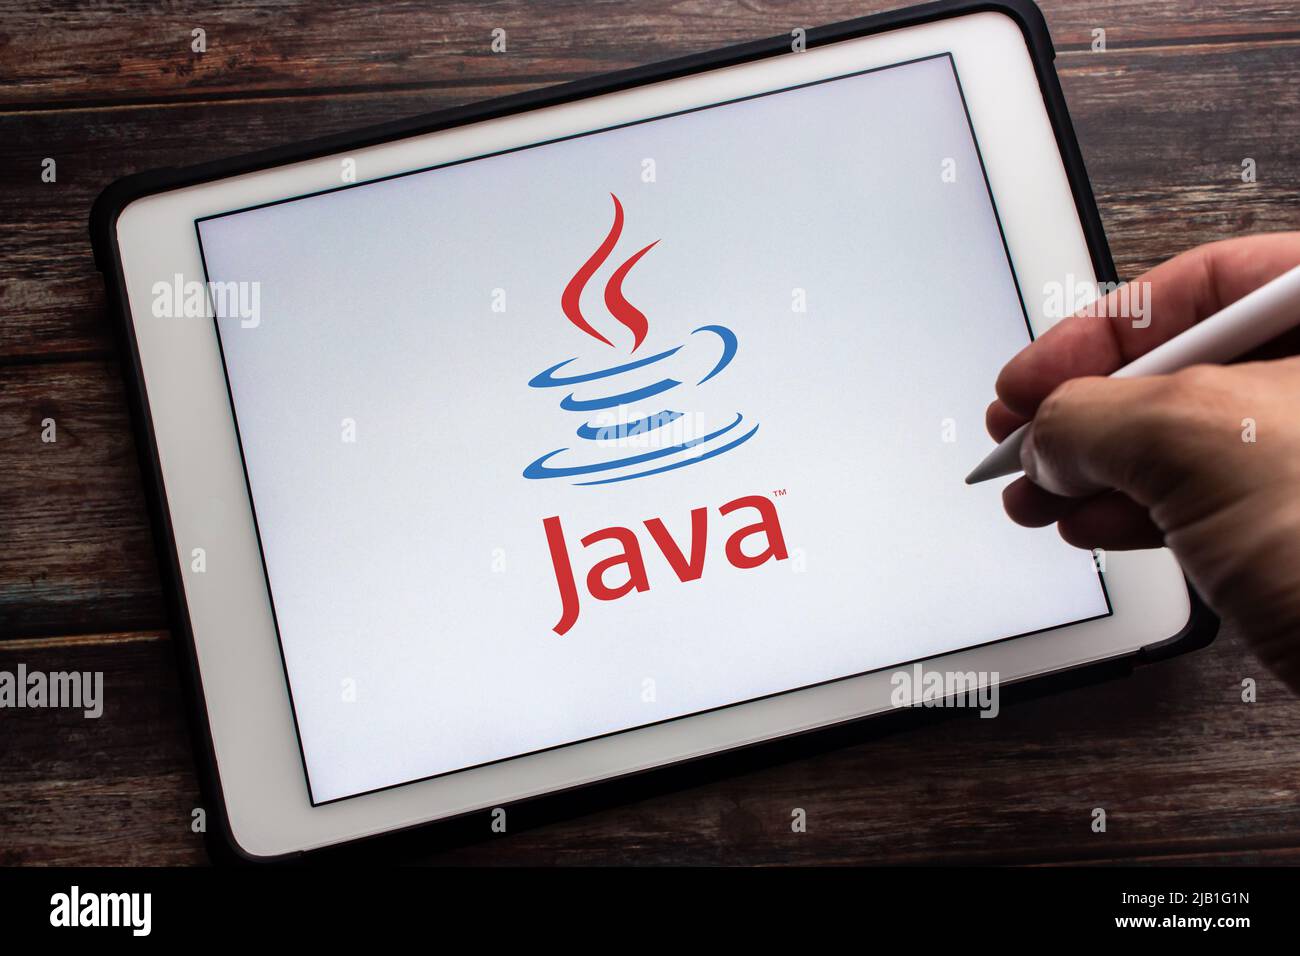 Kumamoto, JAPAN - May 13 2021 : Logo of Java on tablet. Java is the popular class-based, object-oriented programming language. Man holding stylus pen. Stock Photo